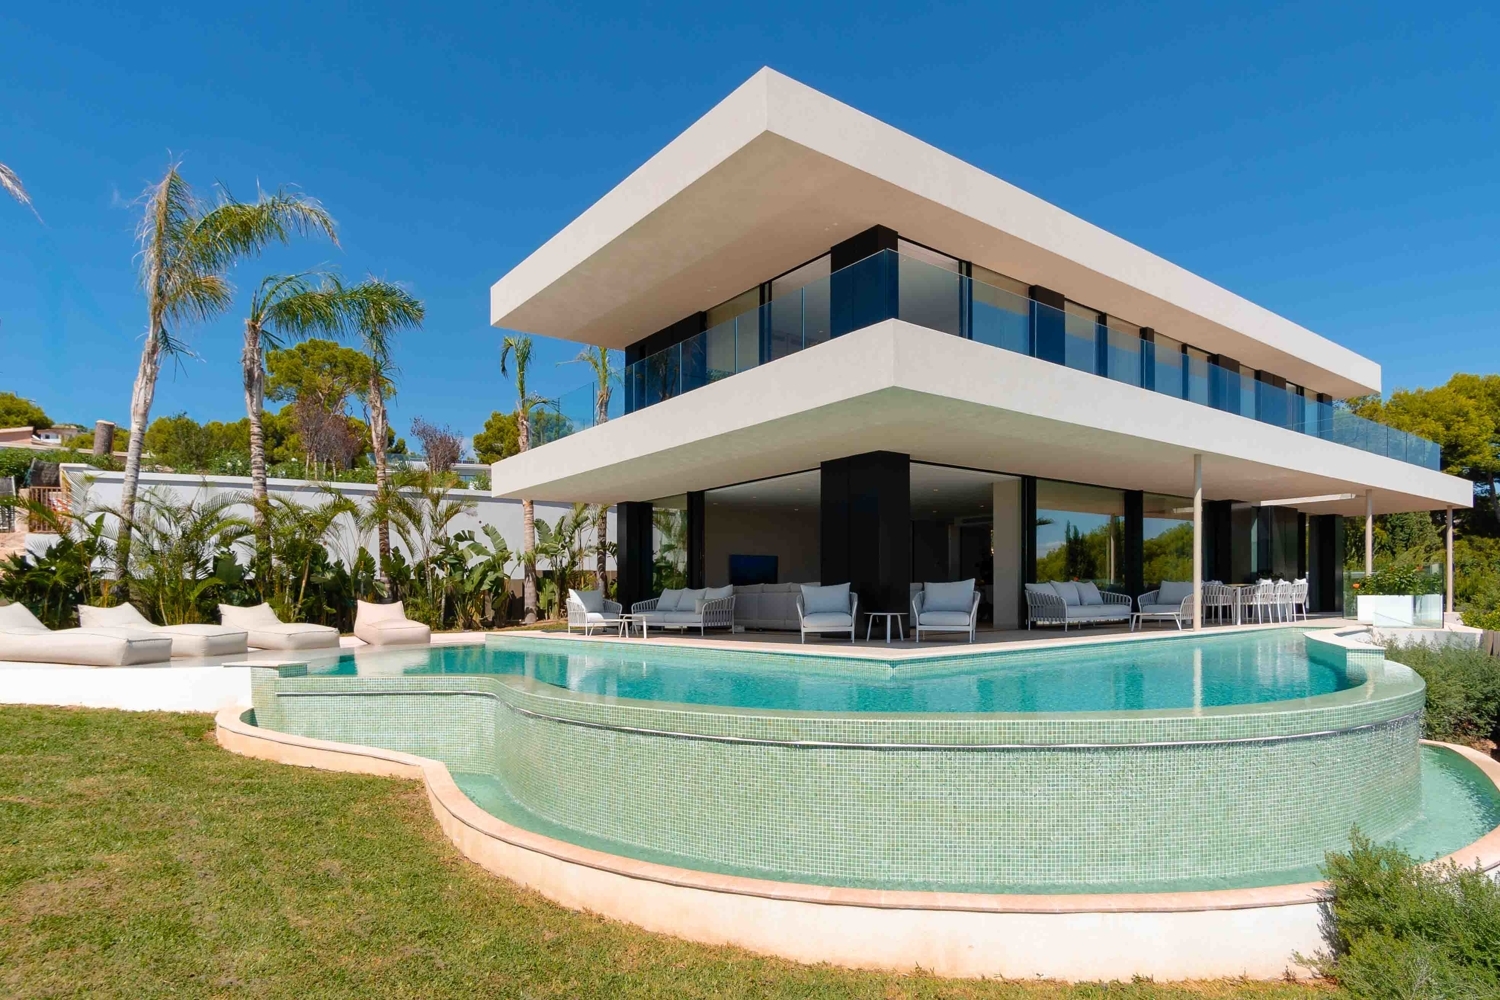 Villa nestled on the hillside of Costa d’en Blanes